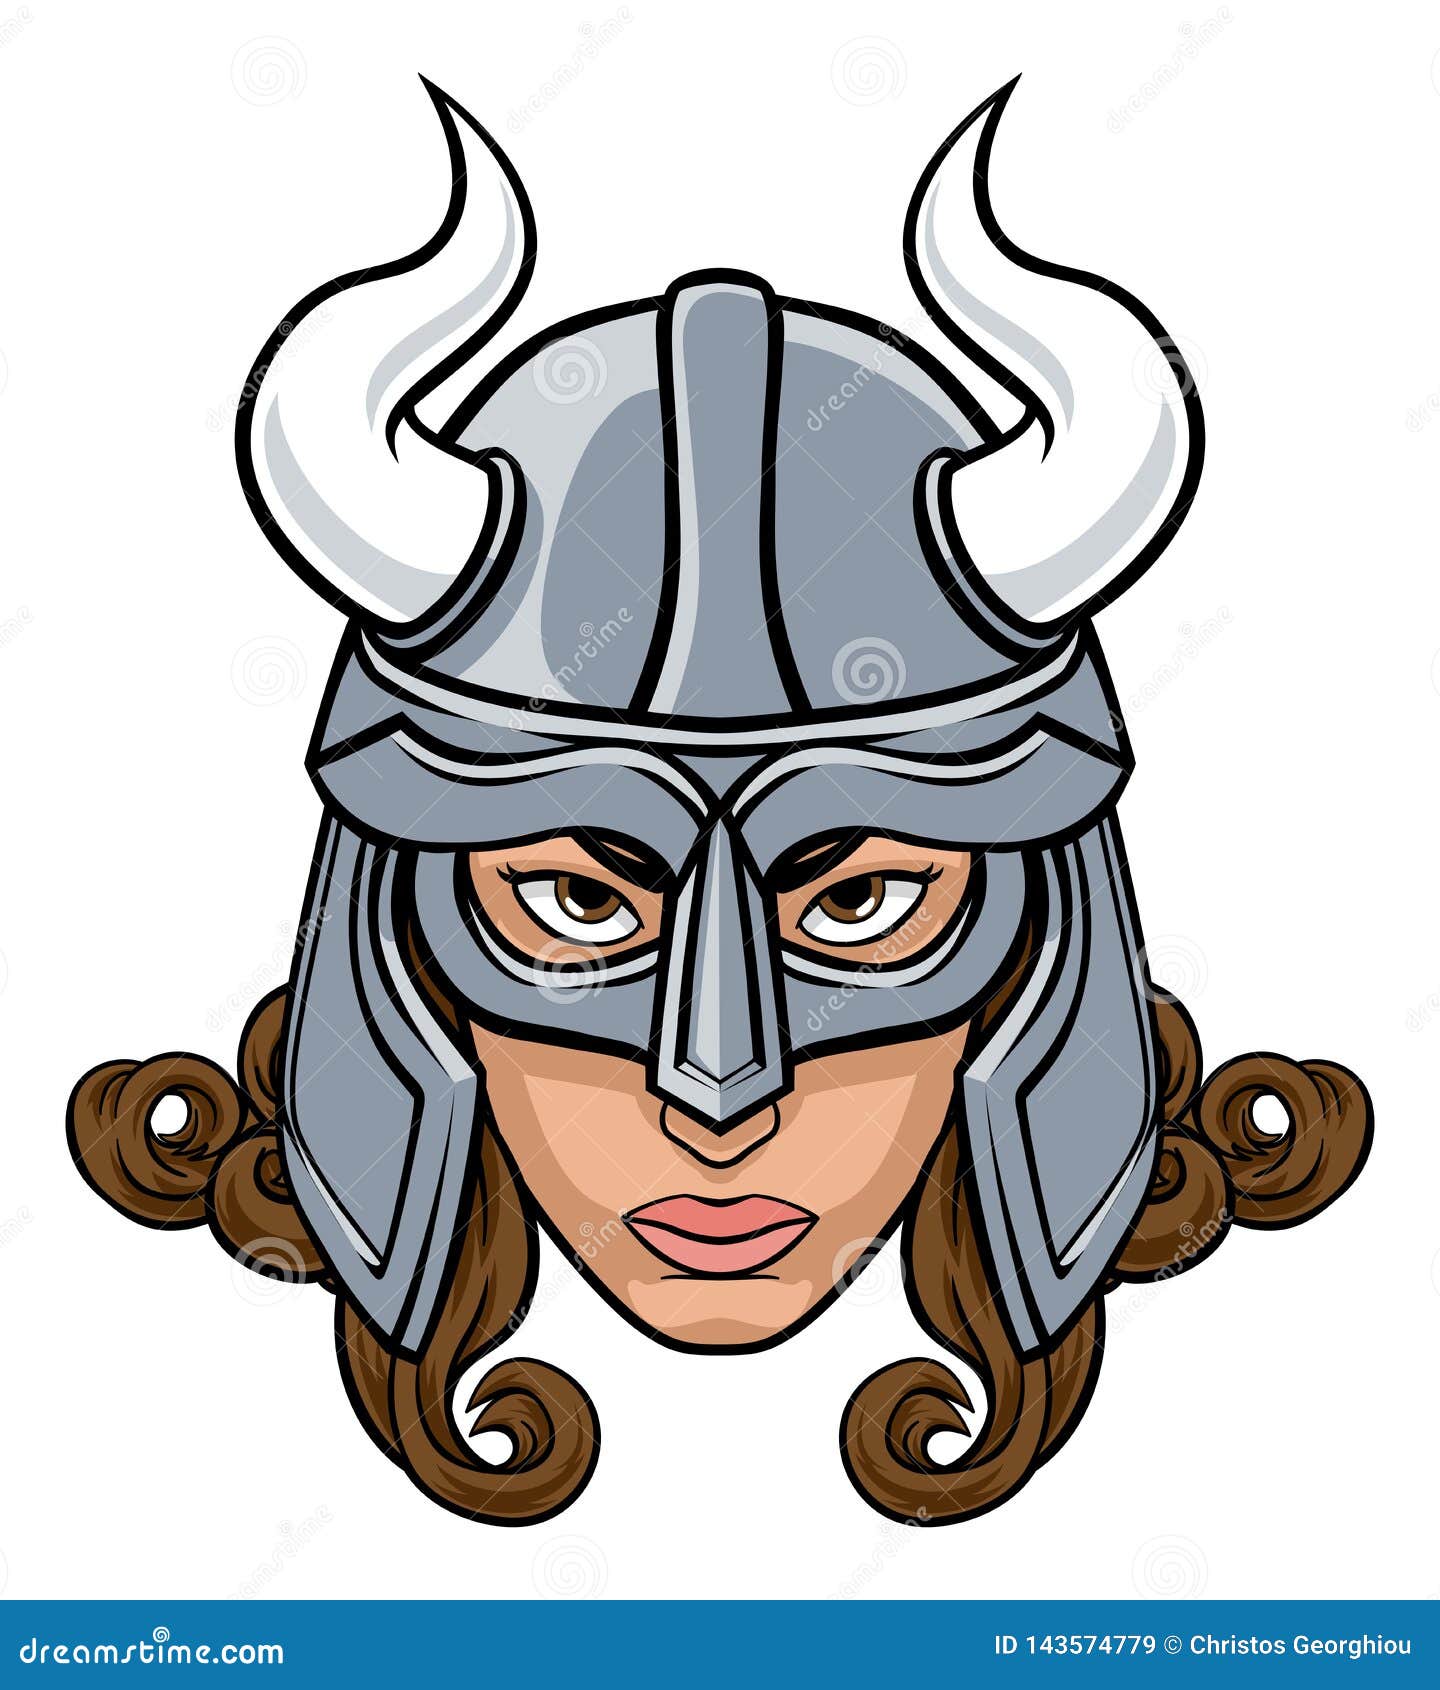 Viking Woman Warrior Mascot Cartoon Vector | CartoonDealer.com #143574779